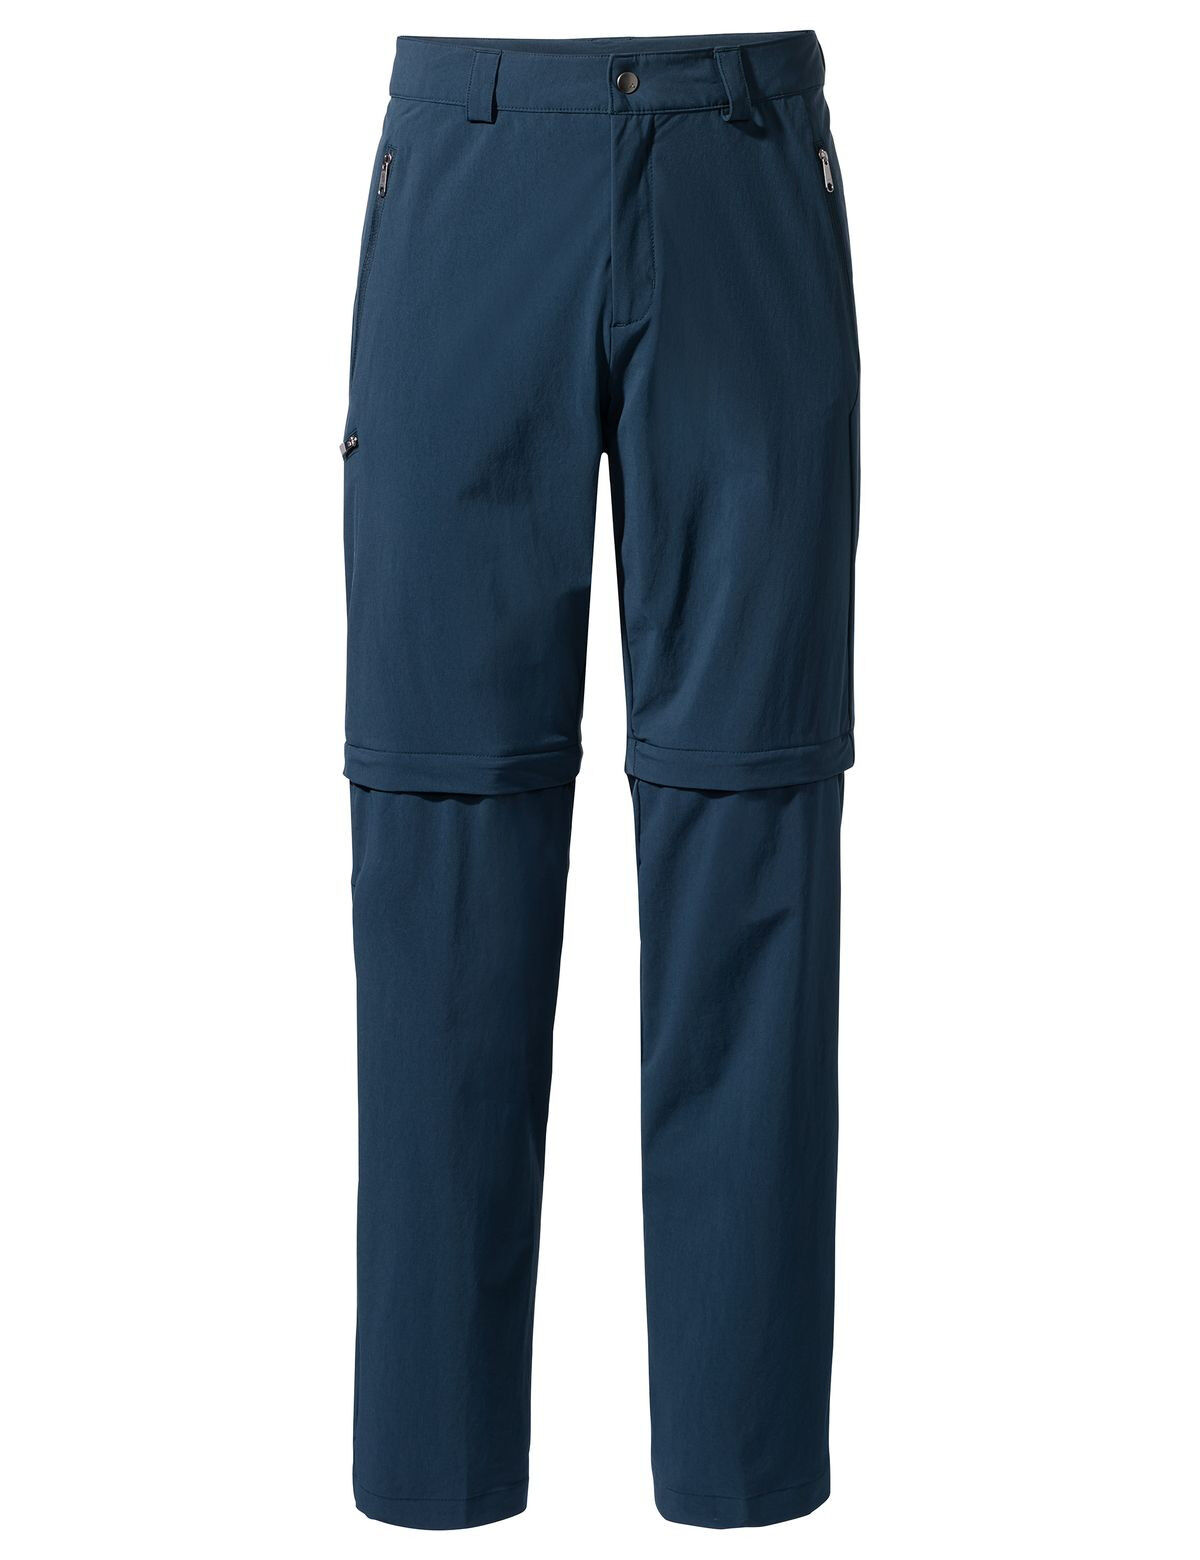 Vaude Farley Stretch ZO Pants II - Hiking trousers - Men's